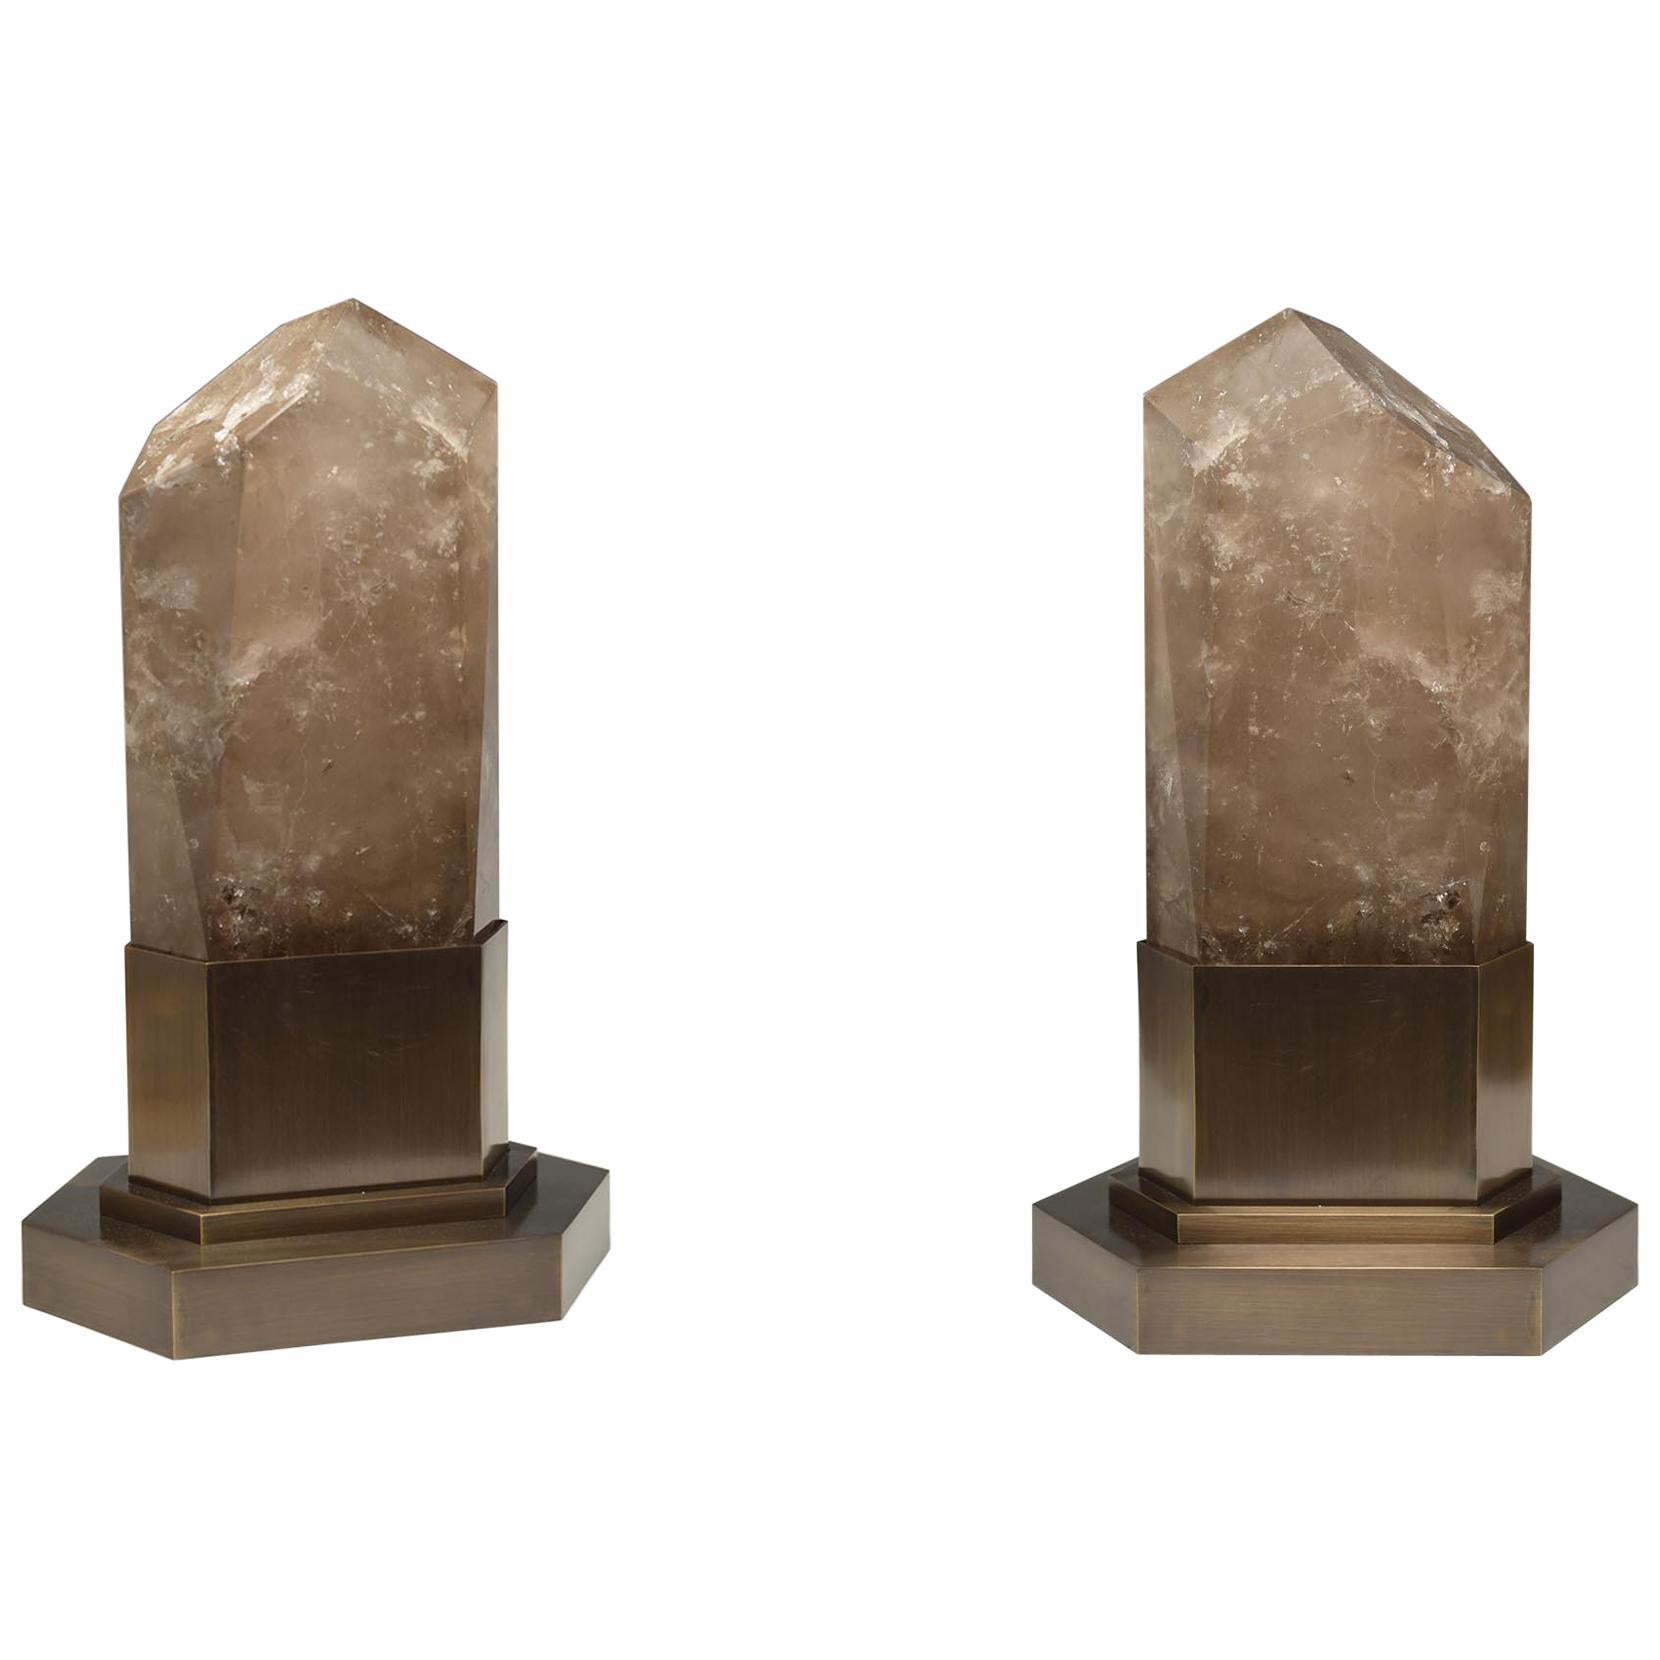 Group of Two Smoky Rock Crystal Obelisk Lights For Sale